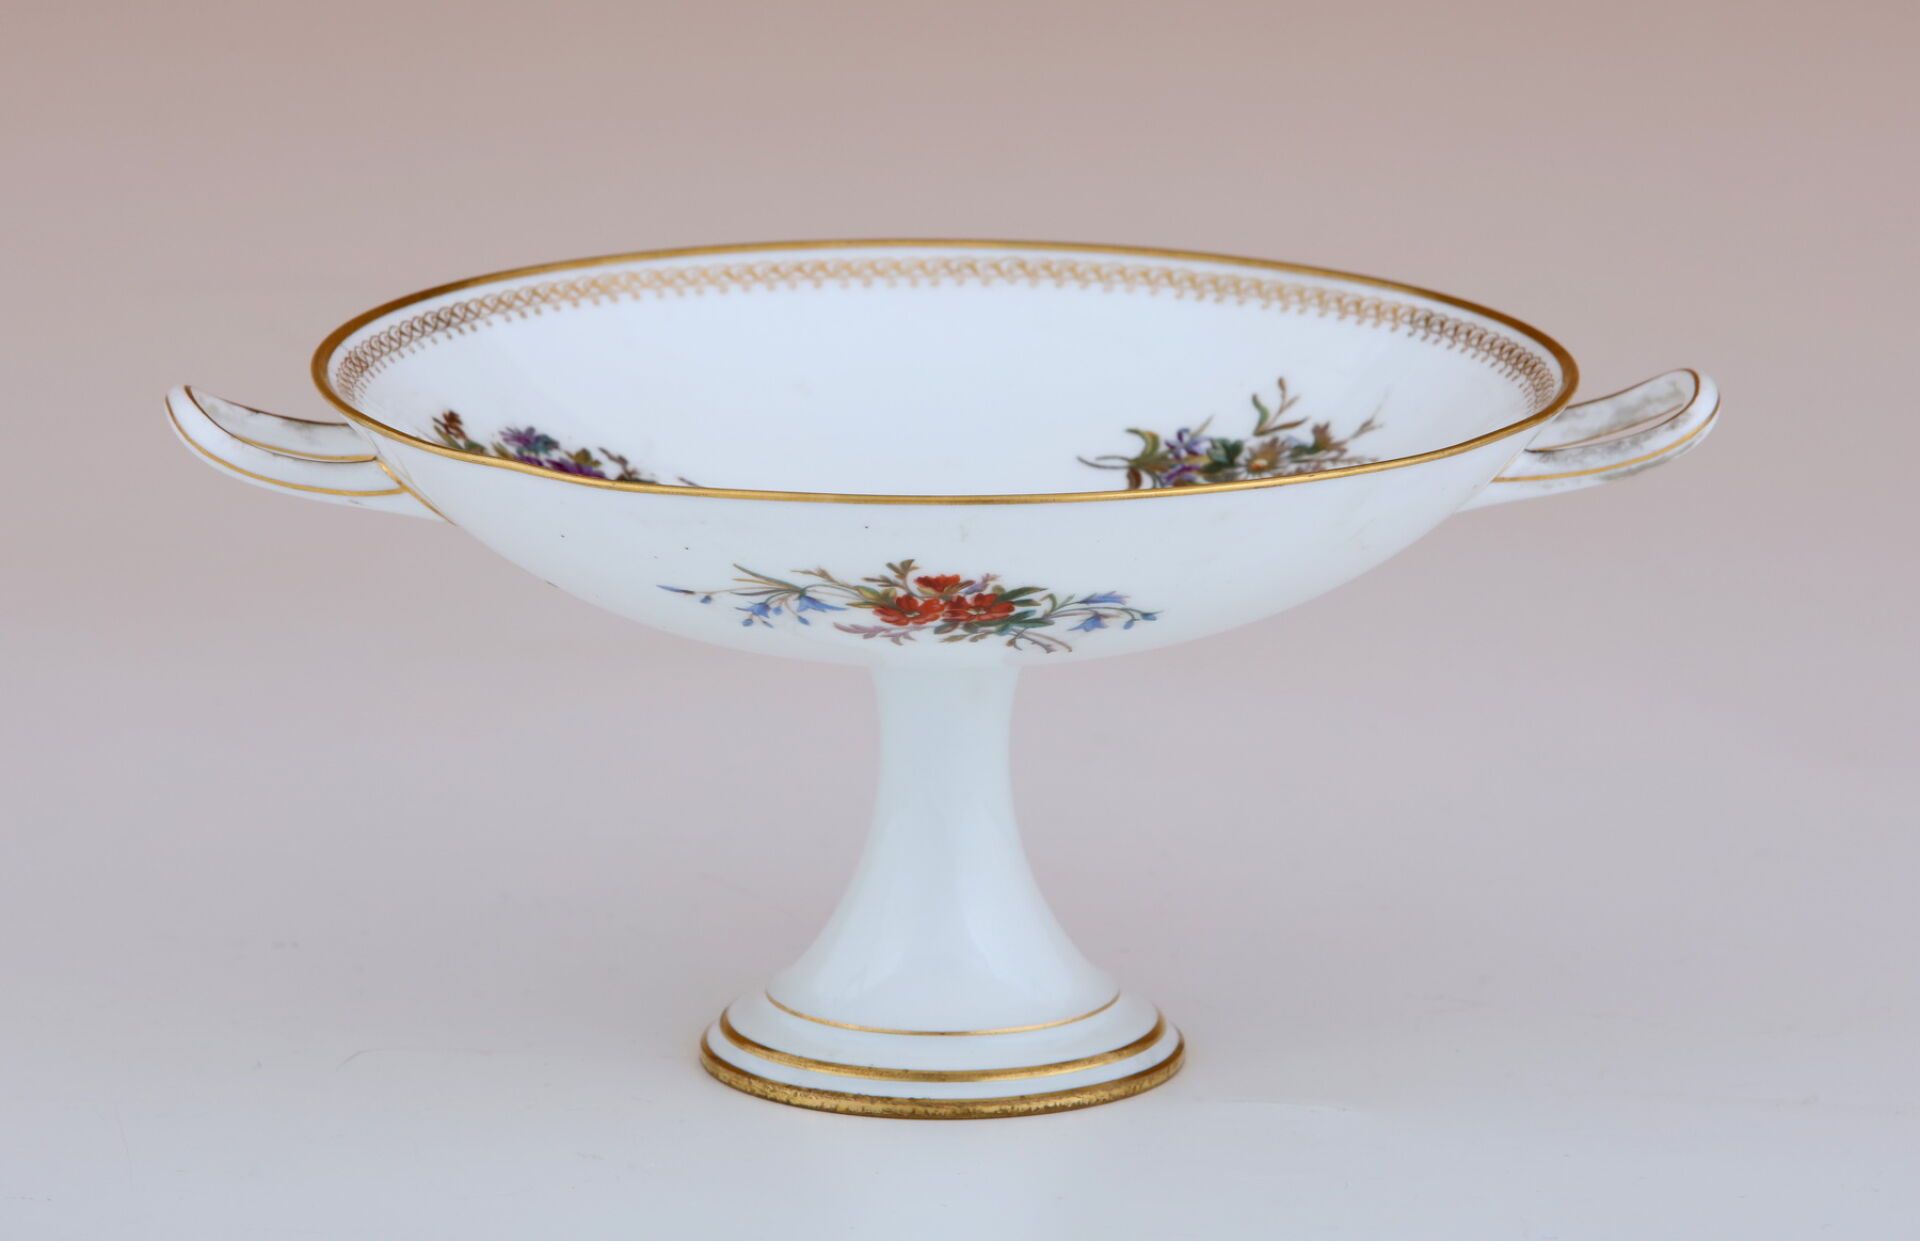 Null SEVRES 制造
脚踏碗
十九世纪下半叶
瓷质，饰以多色花卉和镀金鱼片
重复使用标记
H.10 厘米 - 17 厘米
(轻微变形）